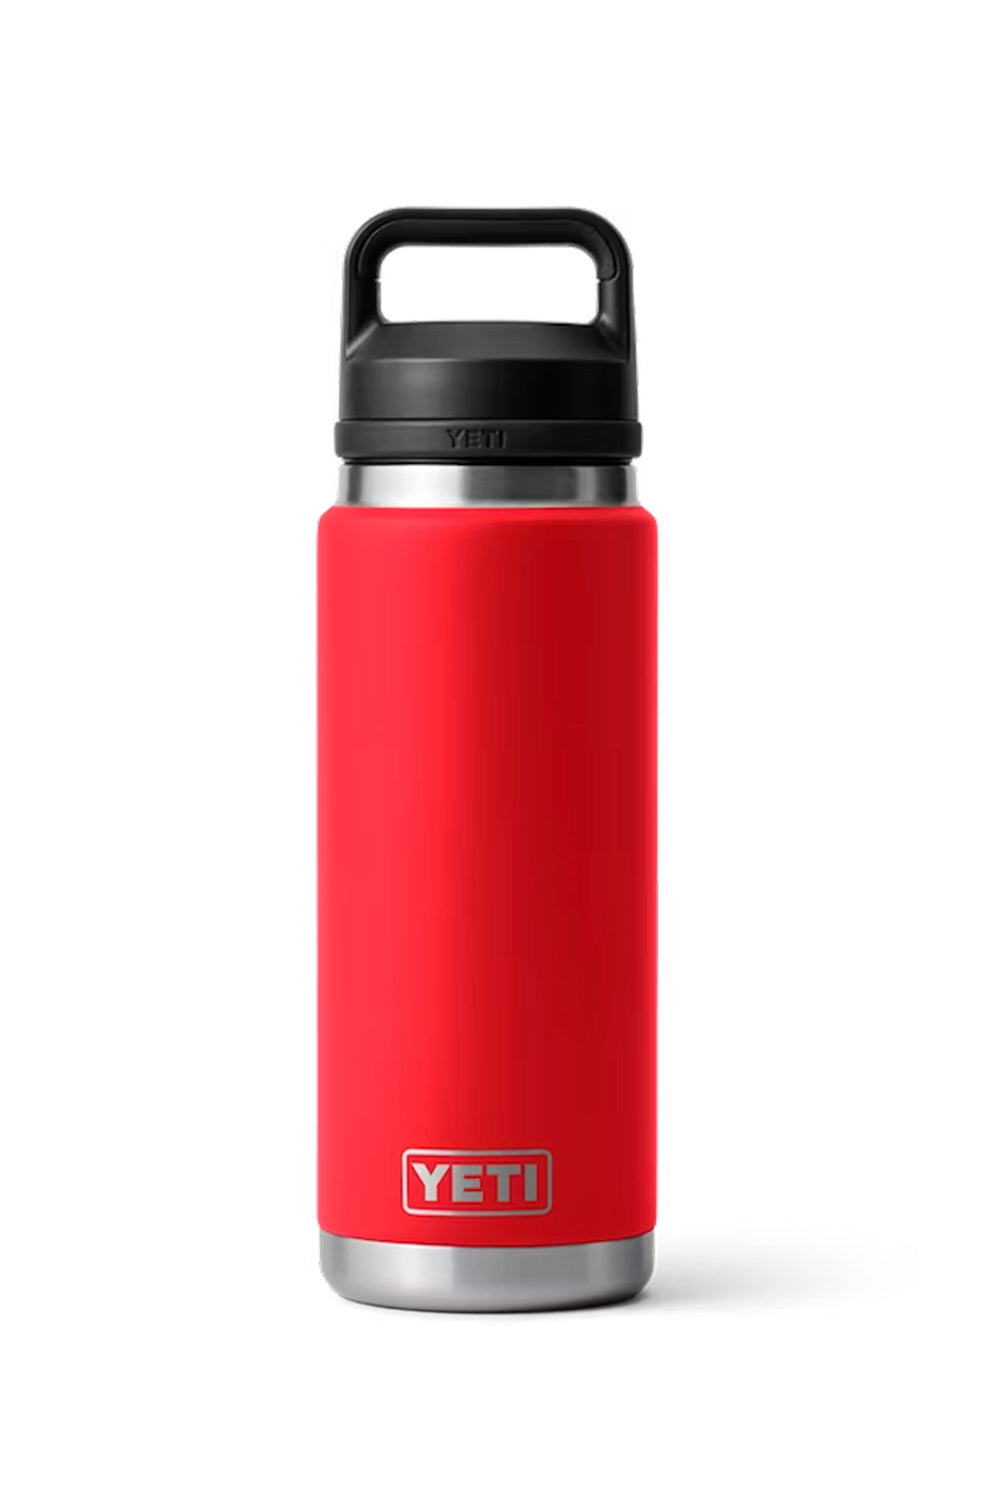 Pukas-Surf-Shop-Yeti-drinkware-26oz-water-bottle-rescue-red